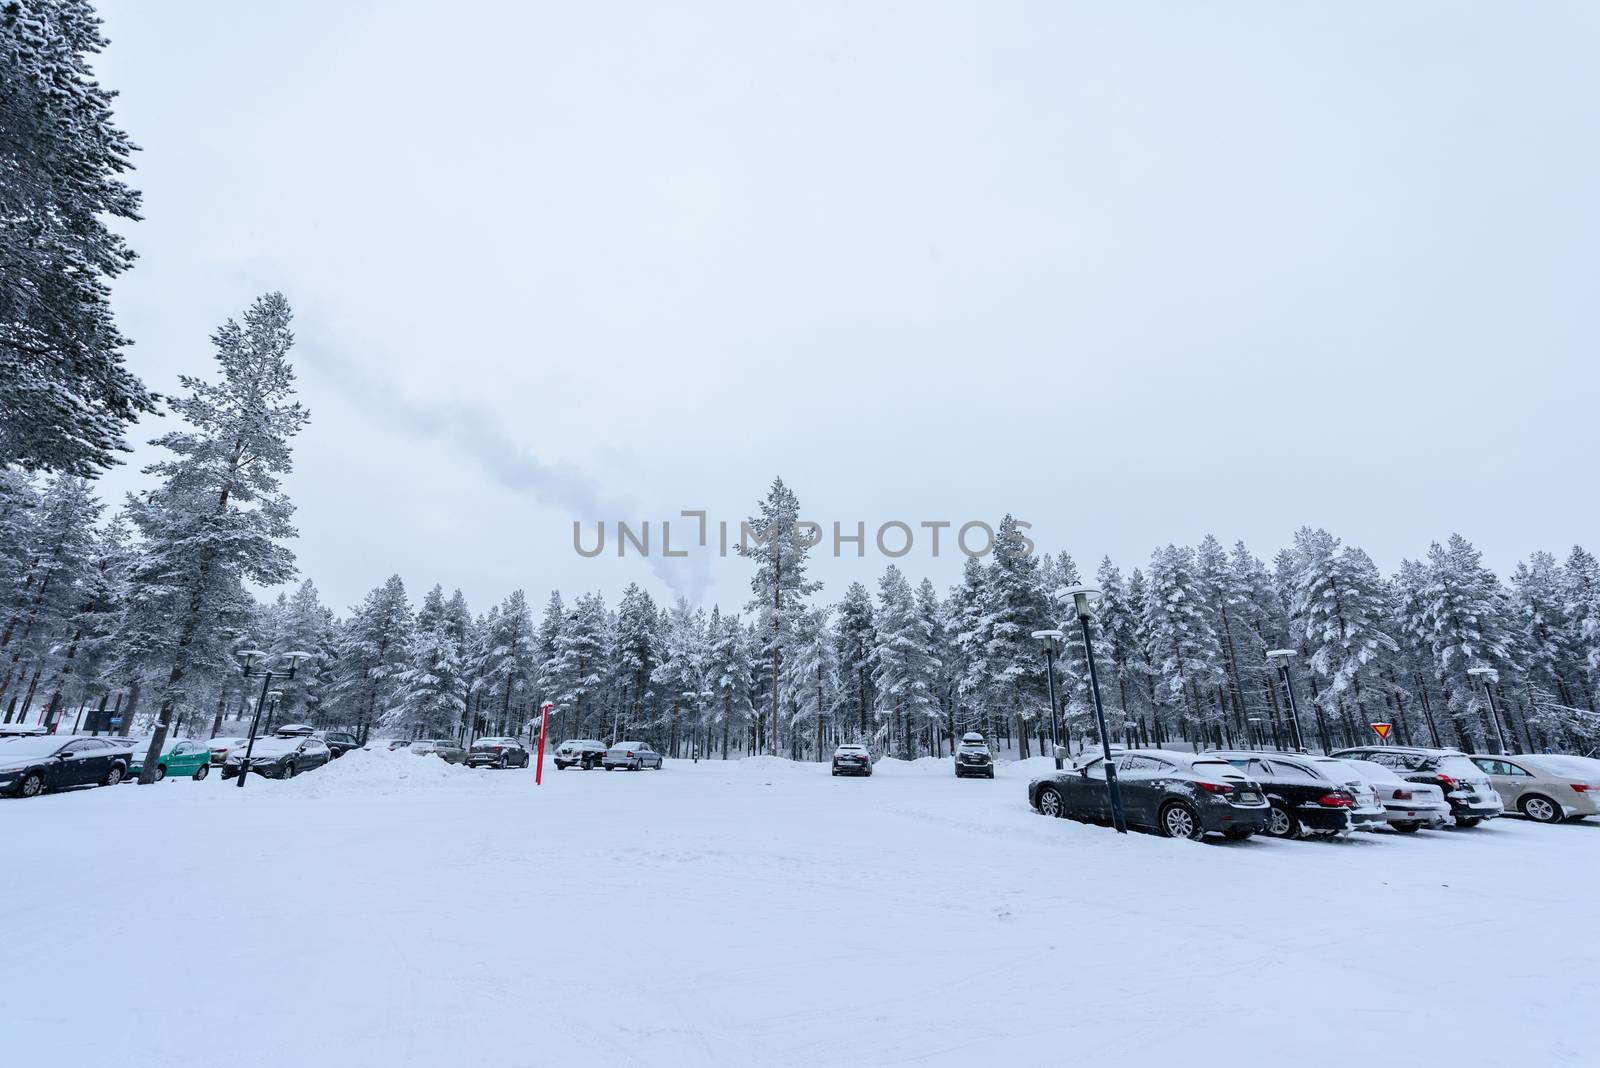 Editorial: Kuusamon City, Finland, 27th December 2018. Car park by animagesdesign